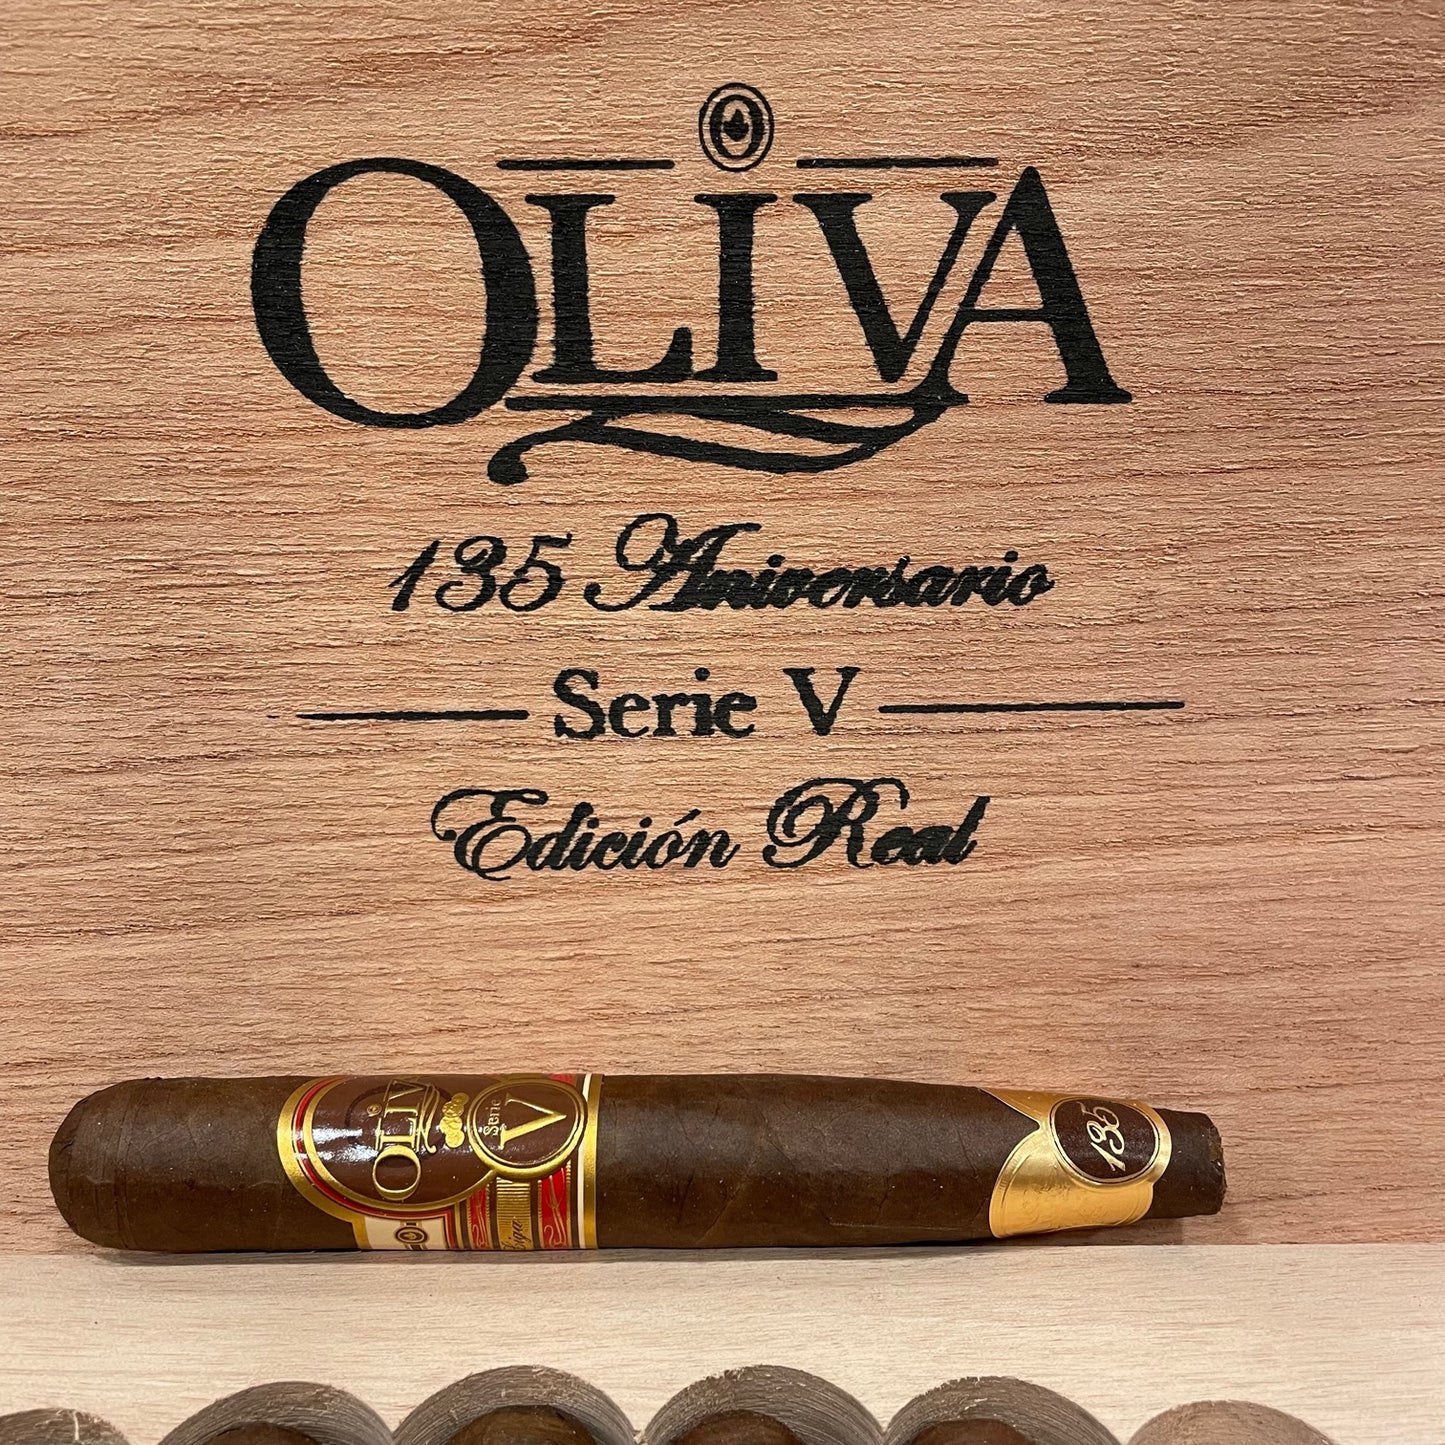 Oliva 135 Anniversary serie V Edition Real